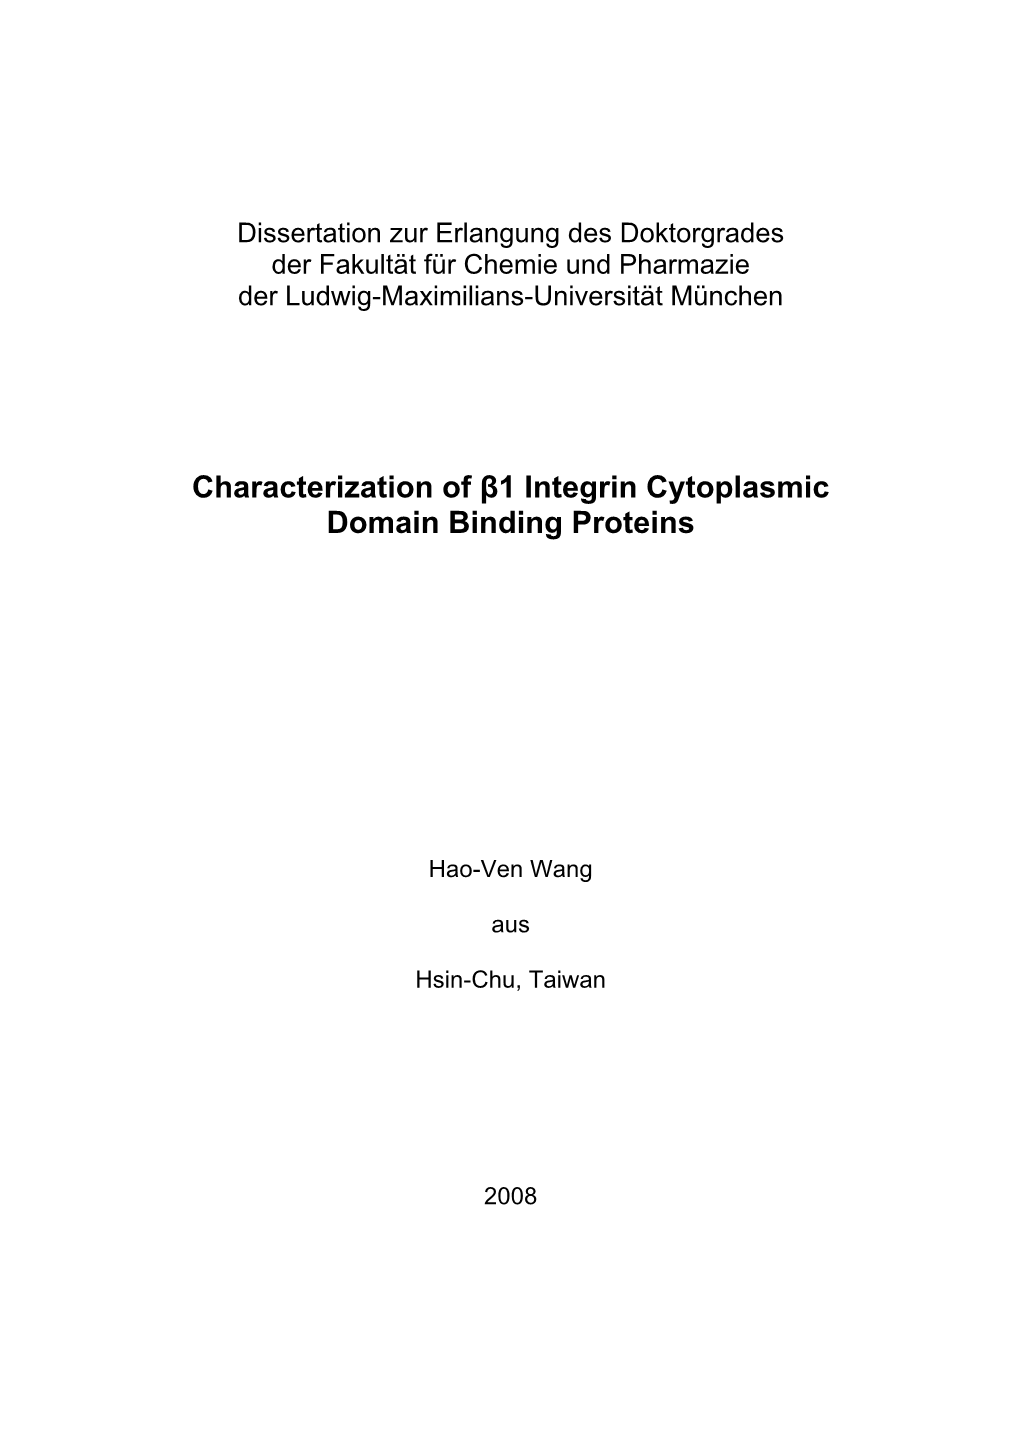 Characterization of Β1 Integrin Cytoplasmic Domain Binding Proteins